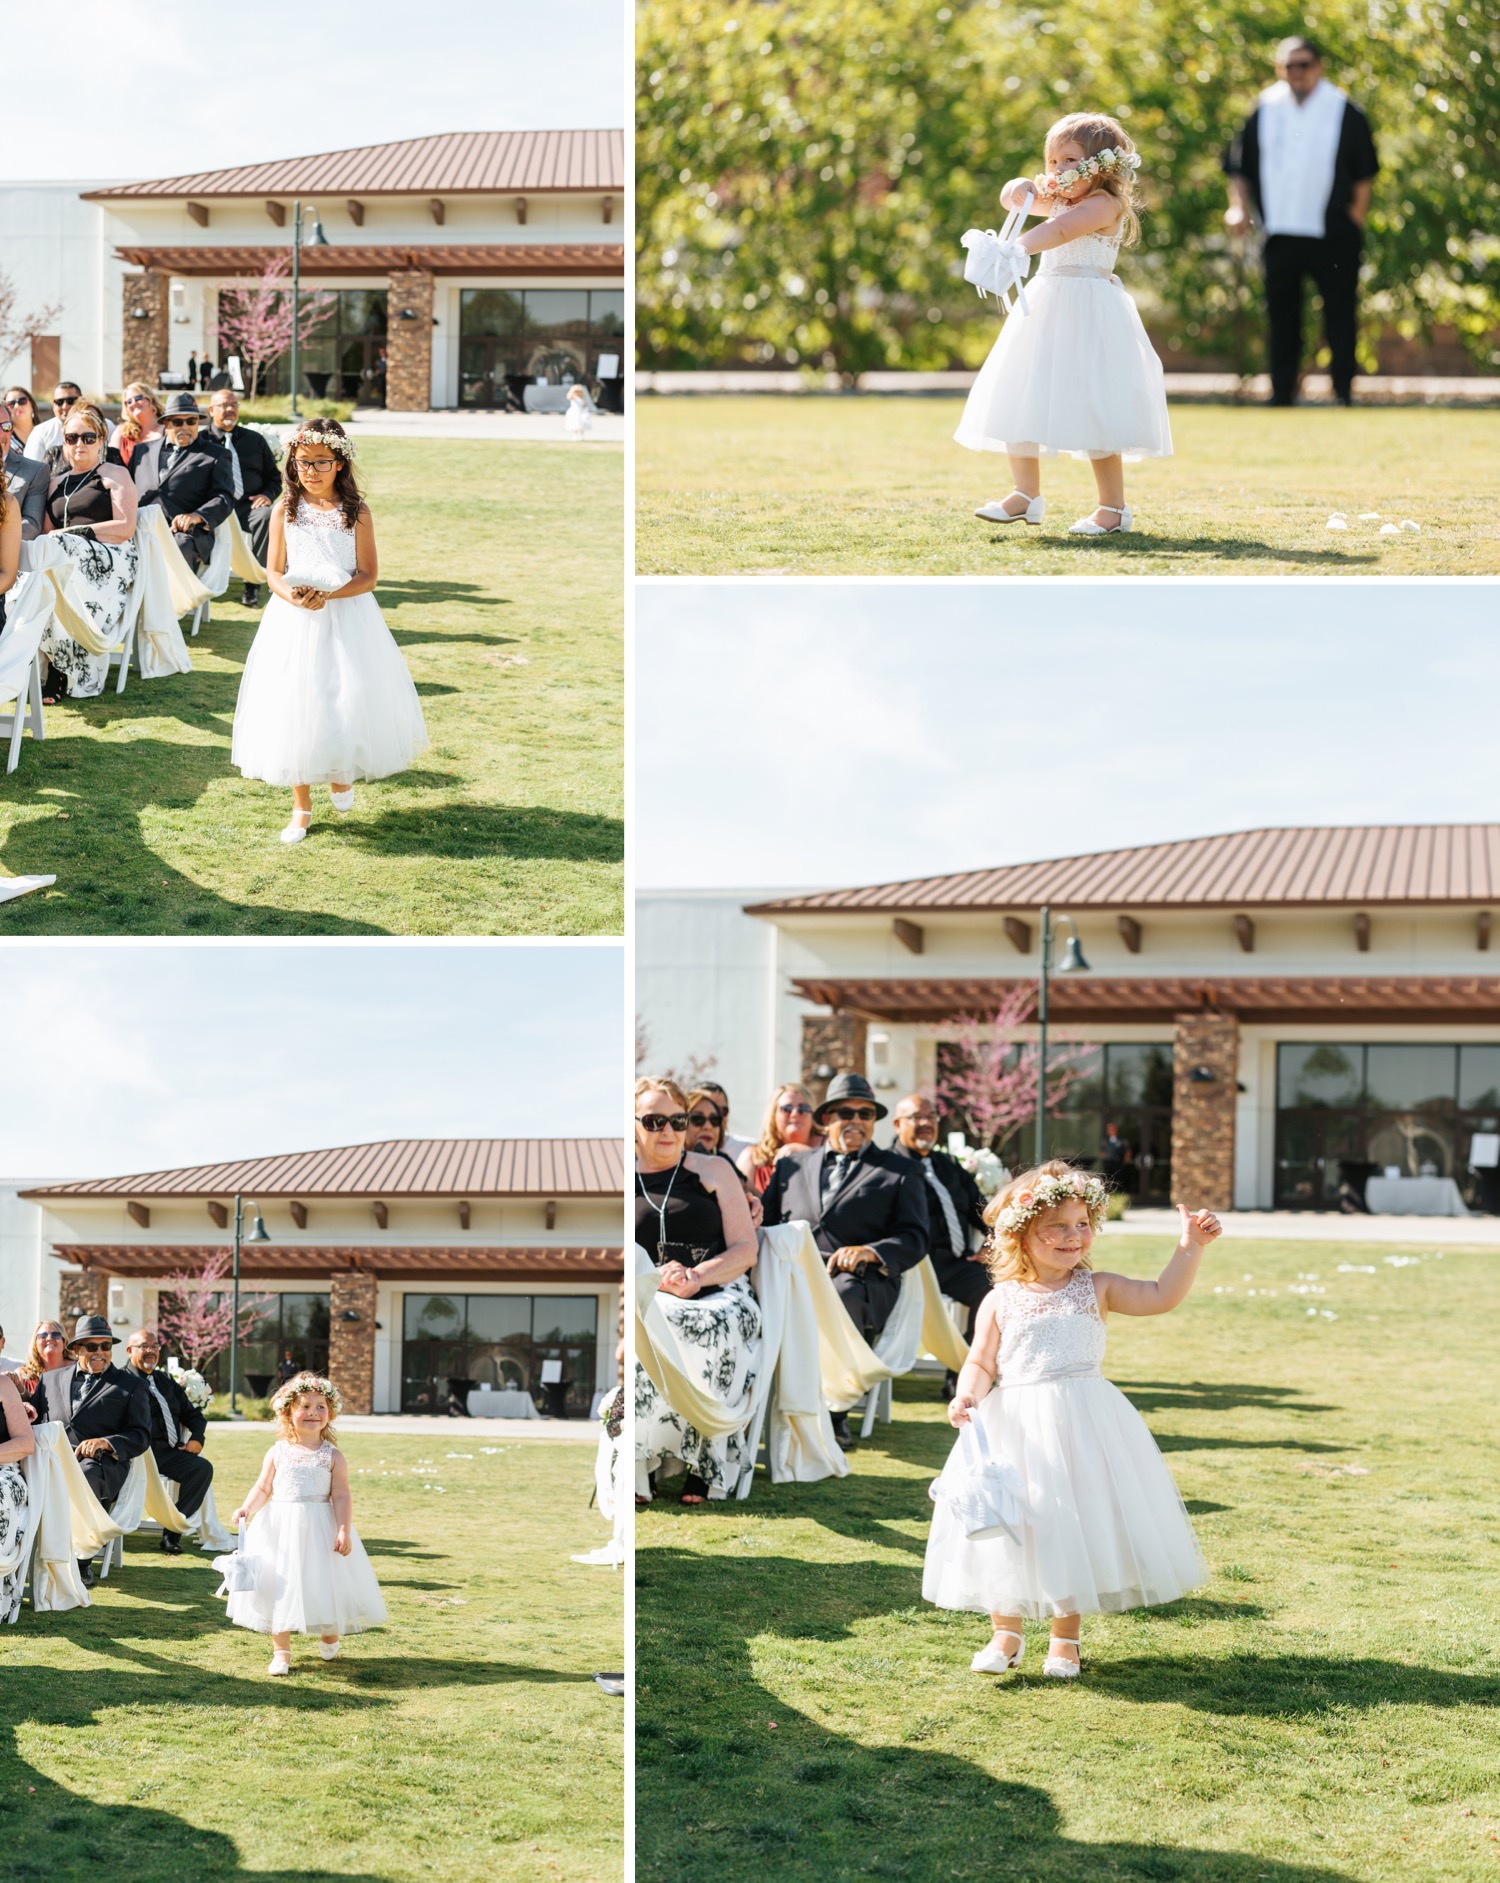 Chino Hills Community Center Wedding - Southern California Wedding Photographer - https://brittneyhannonphotography.com